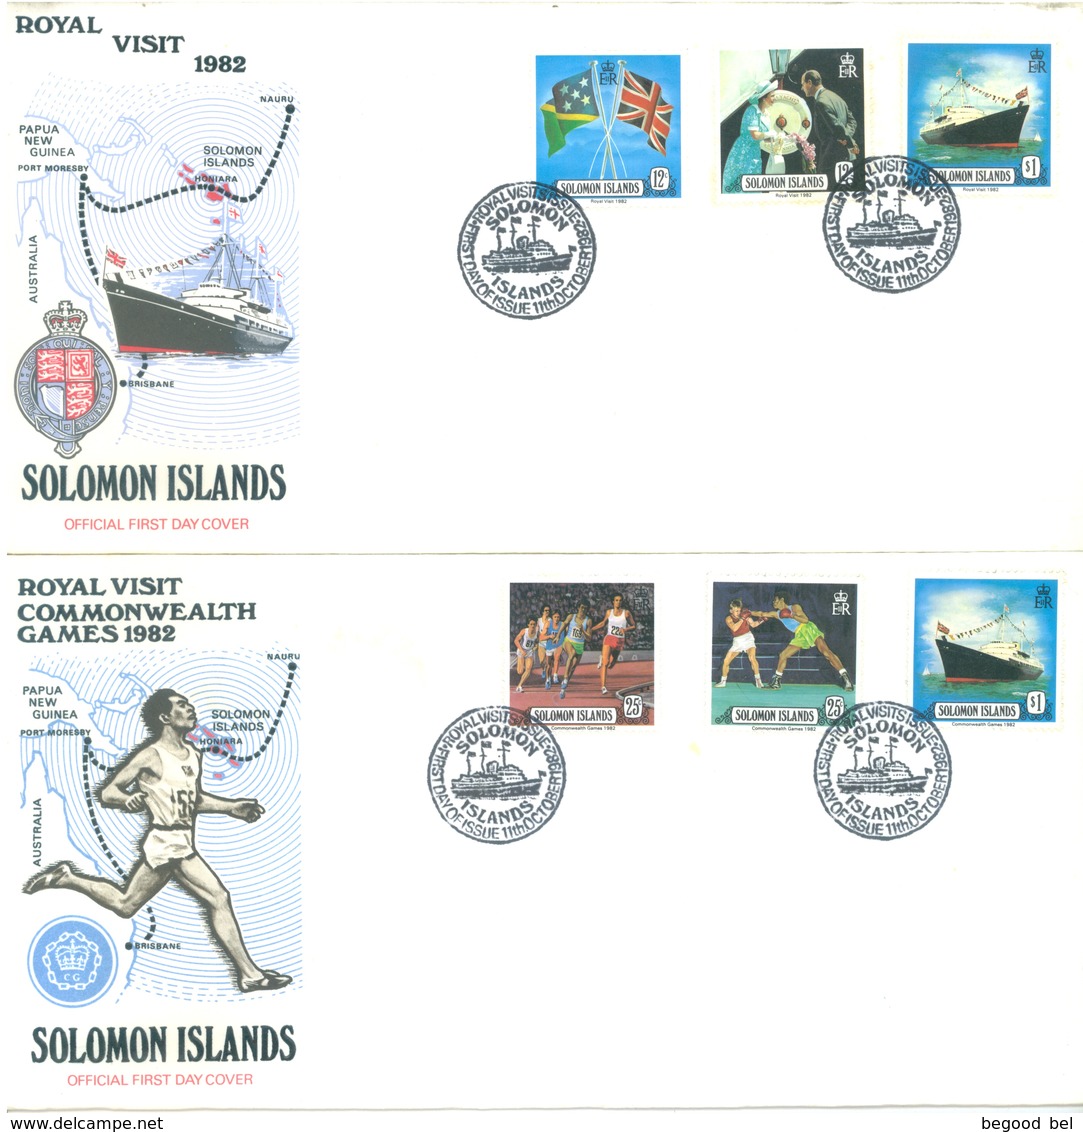 SOLOMON ISLANDS - FDC - 11.10.1982 - ROYAL VISIT - Yv 461-464 STAMPS OF BLOC 10 AND 11 - Lot 17540 - Salomoninseln (Salomonen 1978-...)